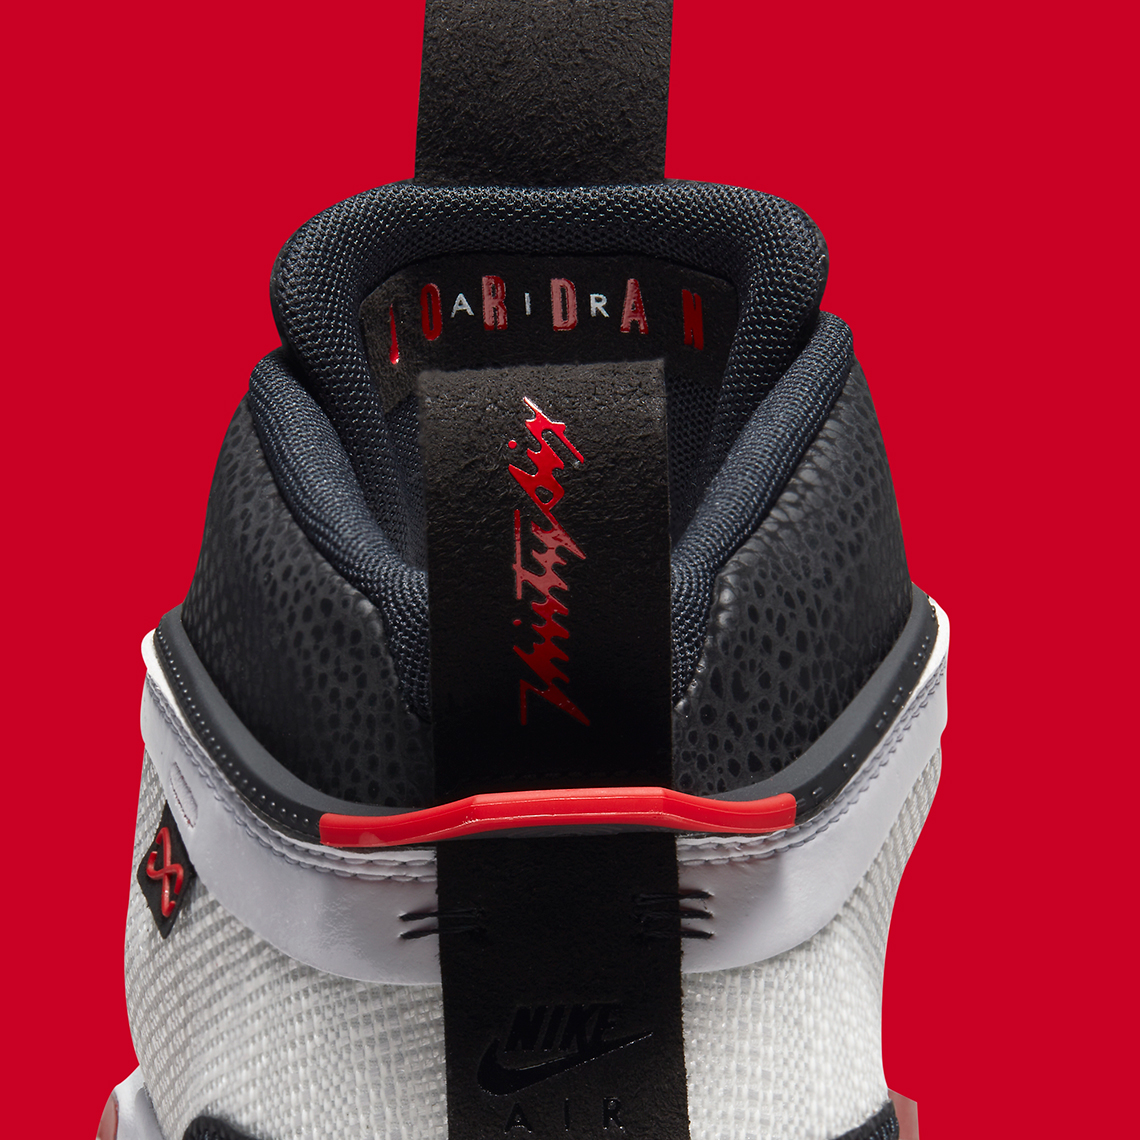 Jordan Brand has been releasing several impressive renditions of the Air Jordan